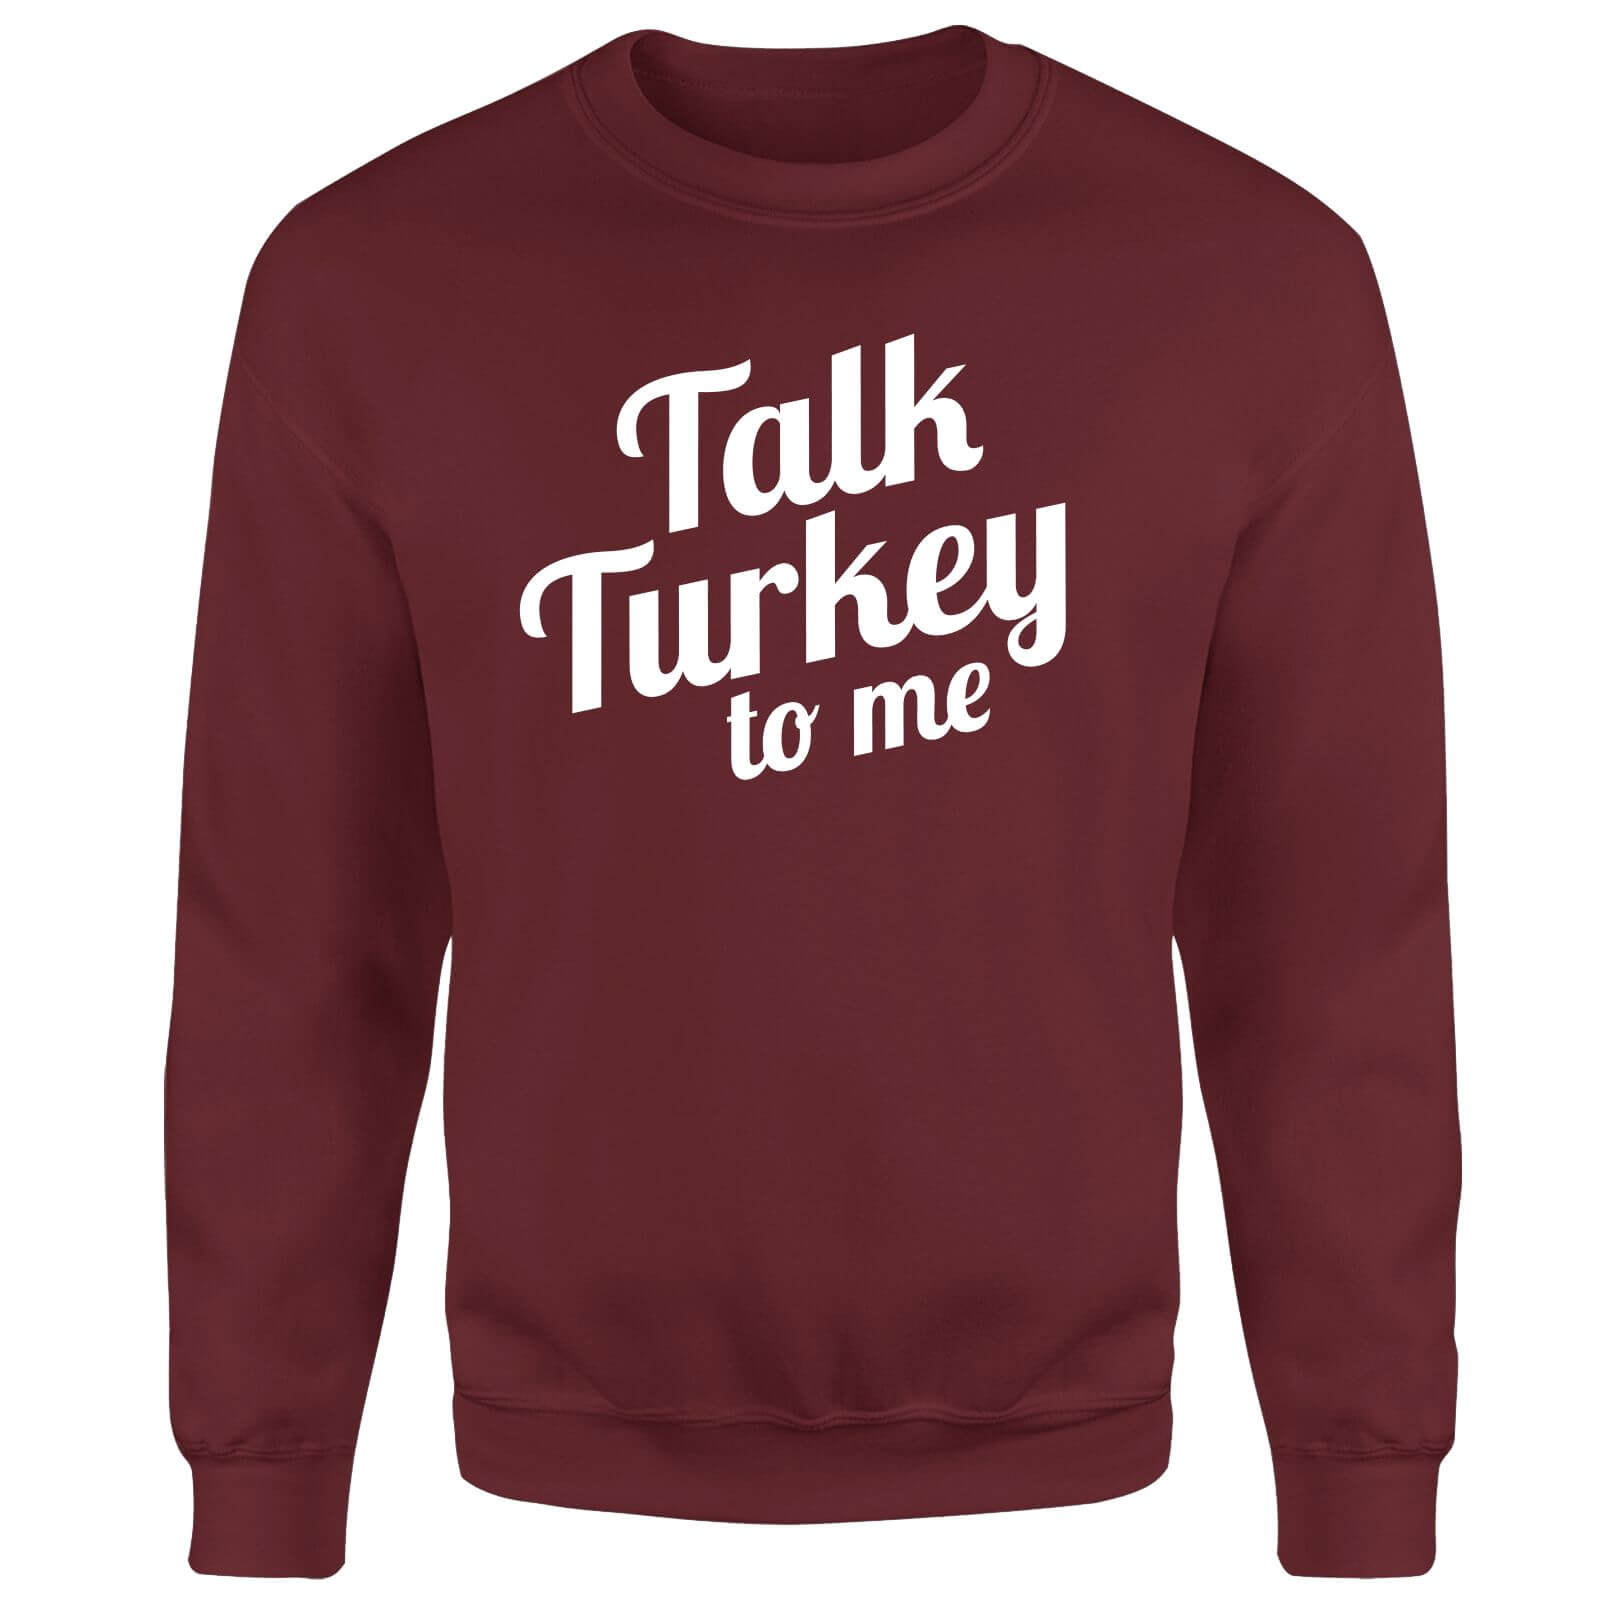 Talk Turkey To Me Unisex Sweatshirt - Burgundy - S - Burgundy